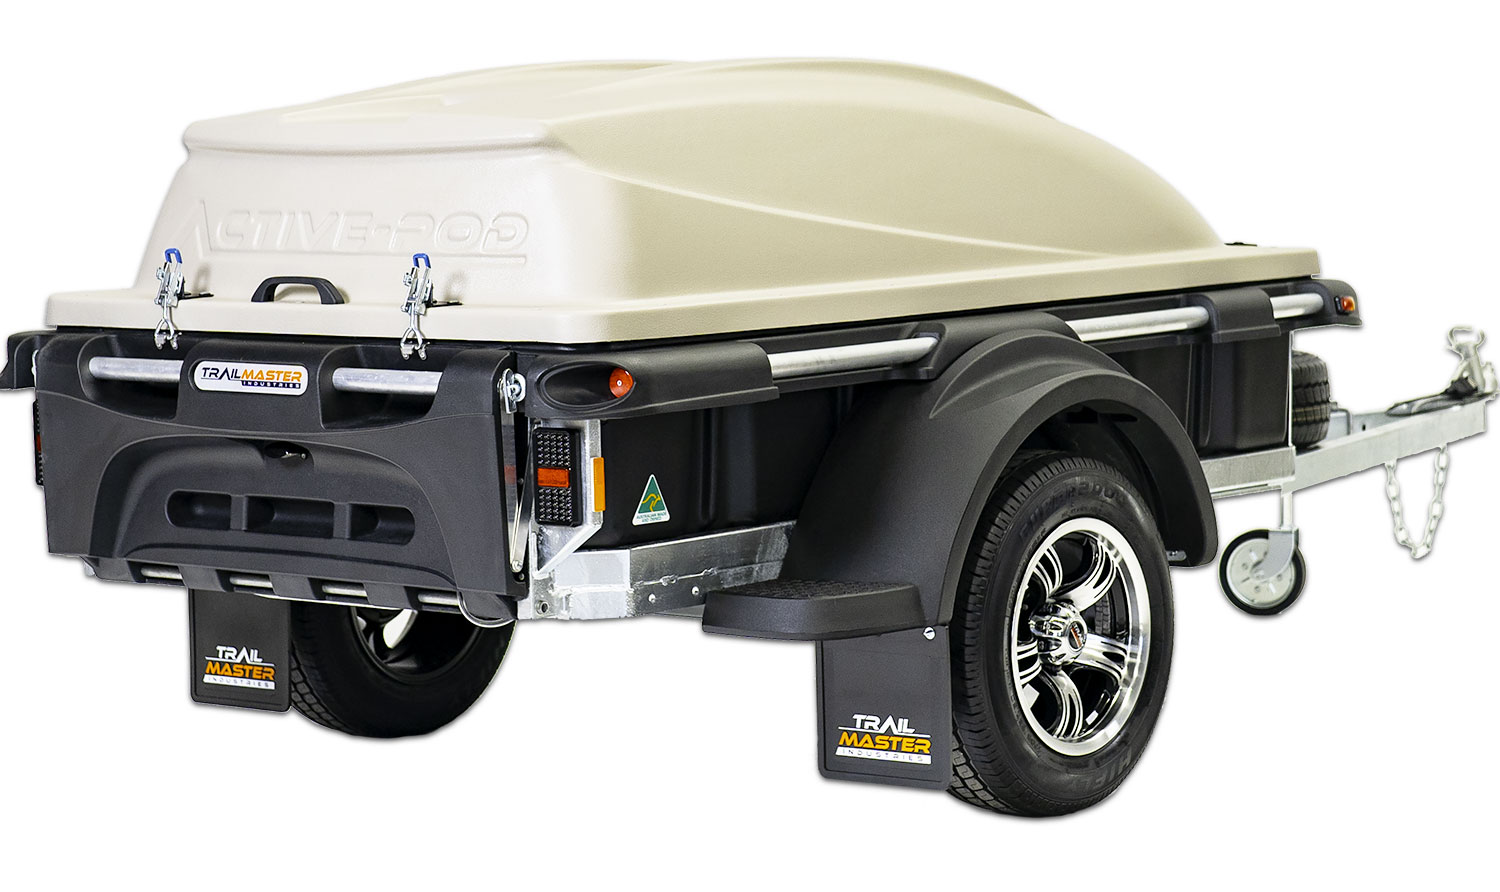 ACTIVE POD Trailer Utility lightweight trailer for smaller vehicles